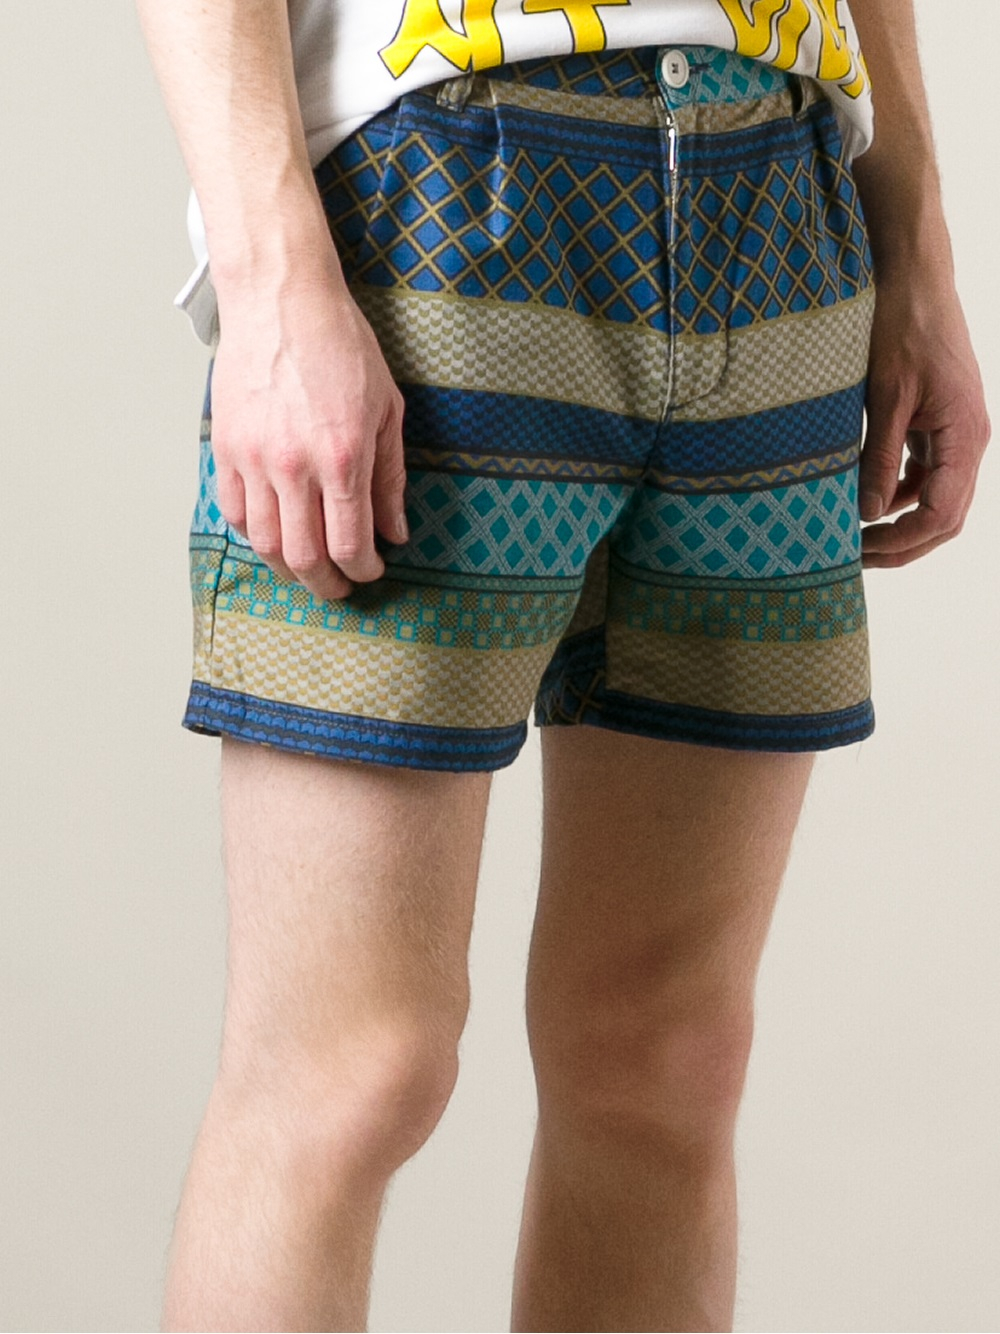 Etudes studio Archives Patterned Shorts for Men | Lyst